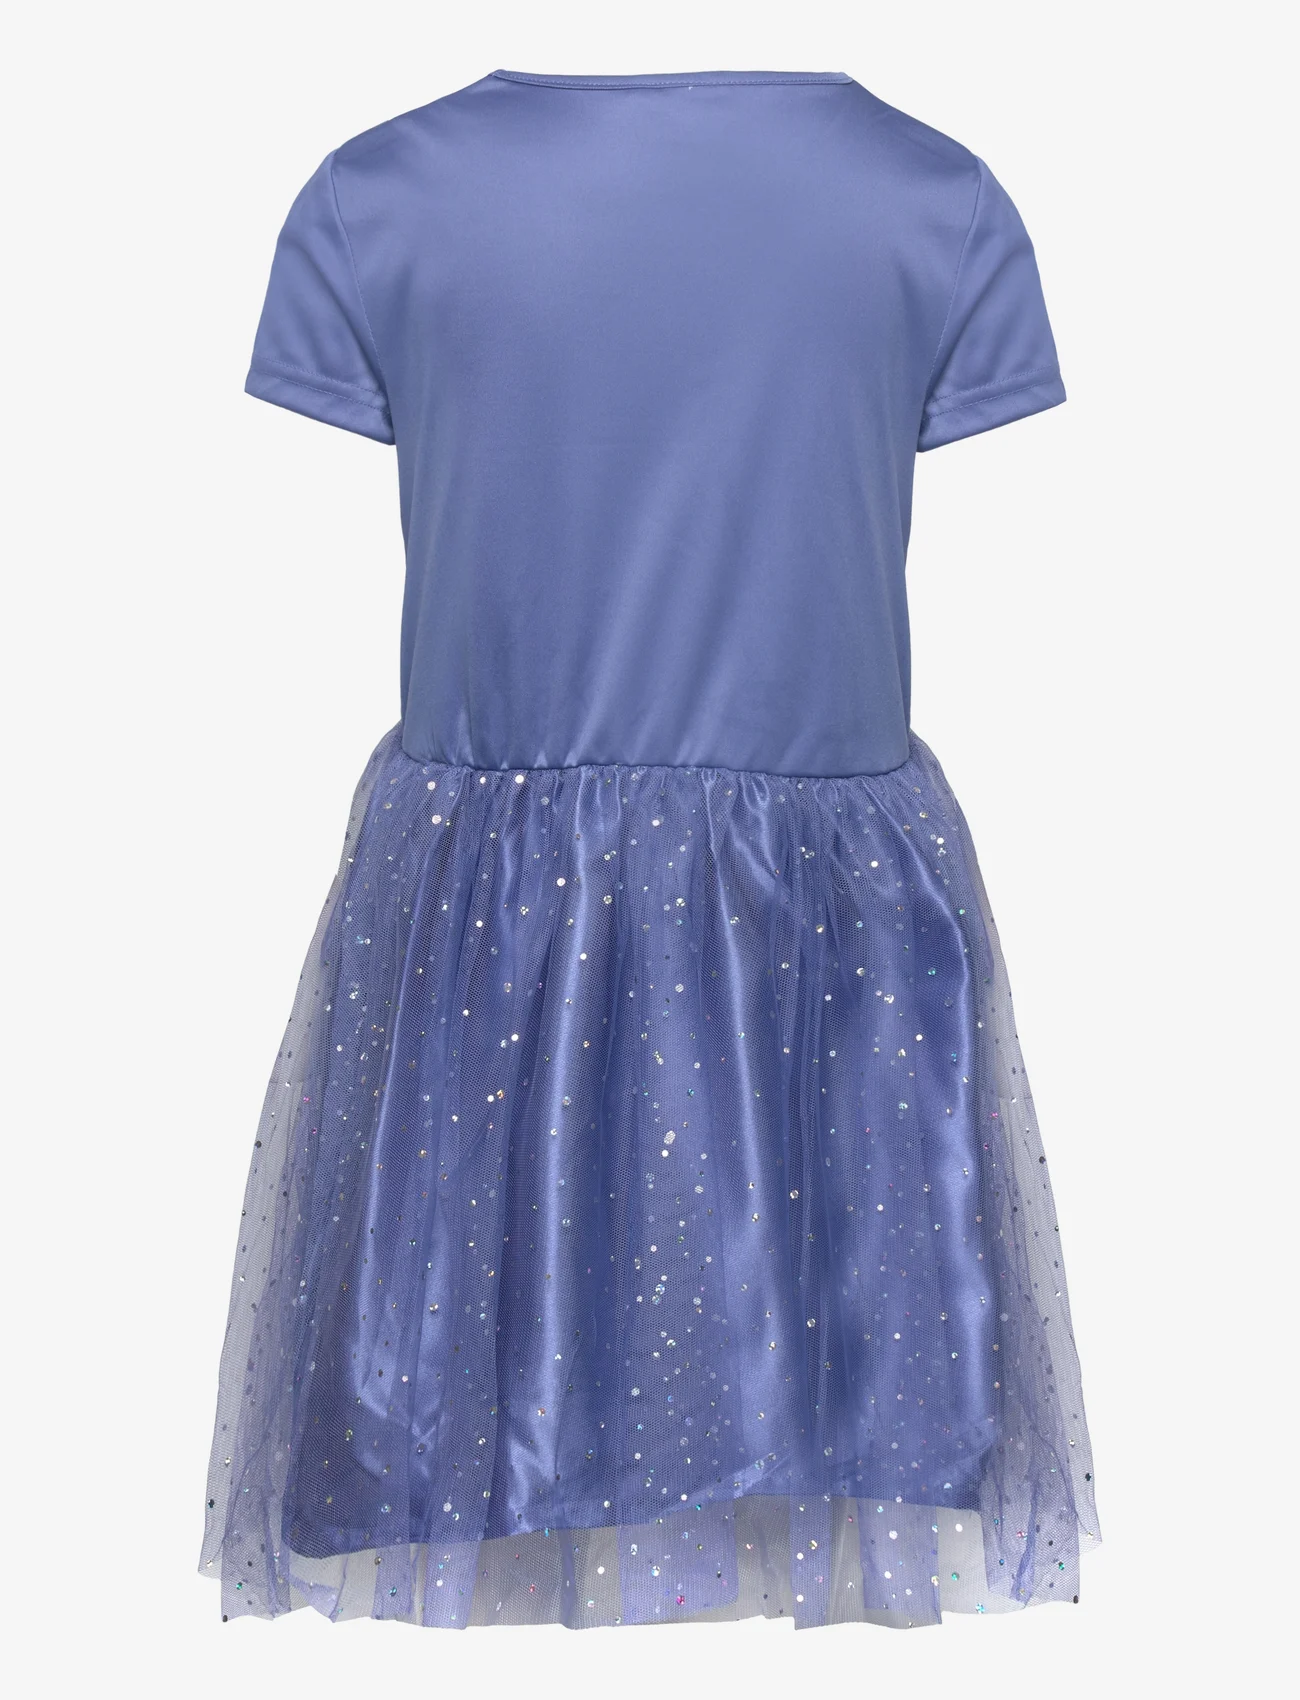 Disney - Dress - dark blue - 1